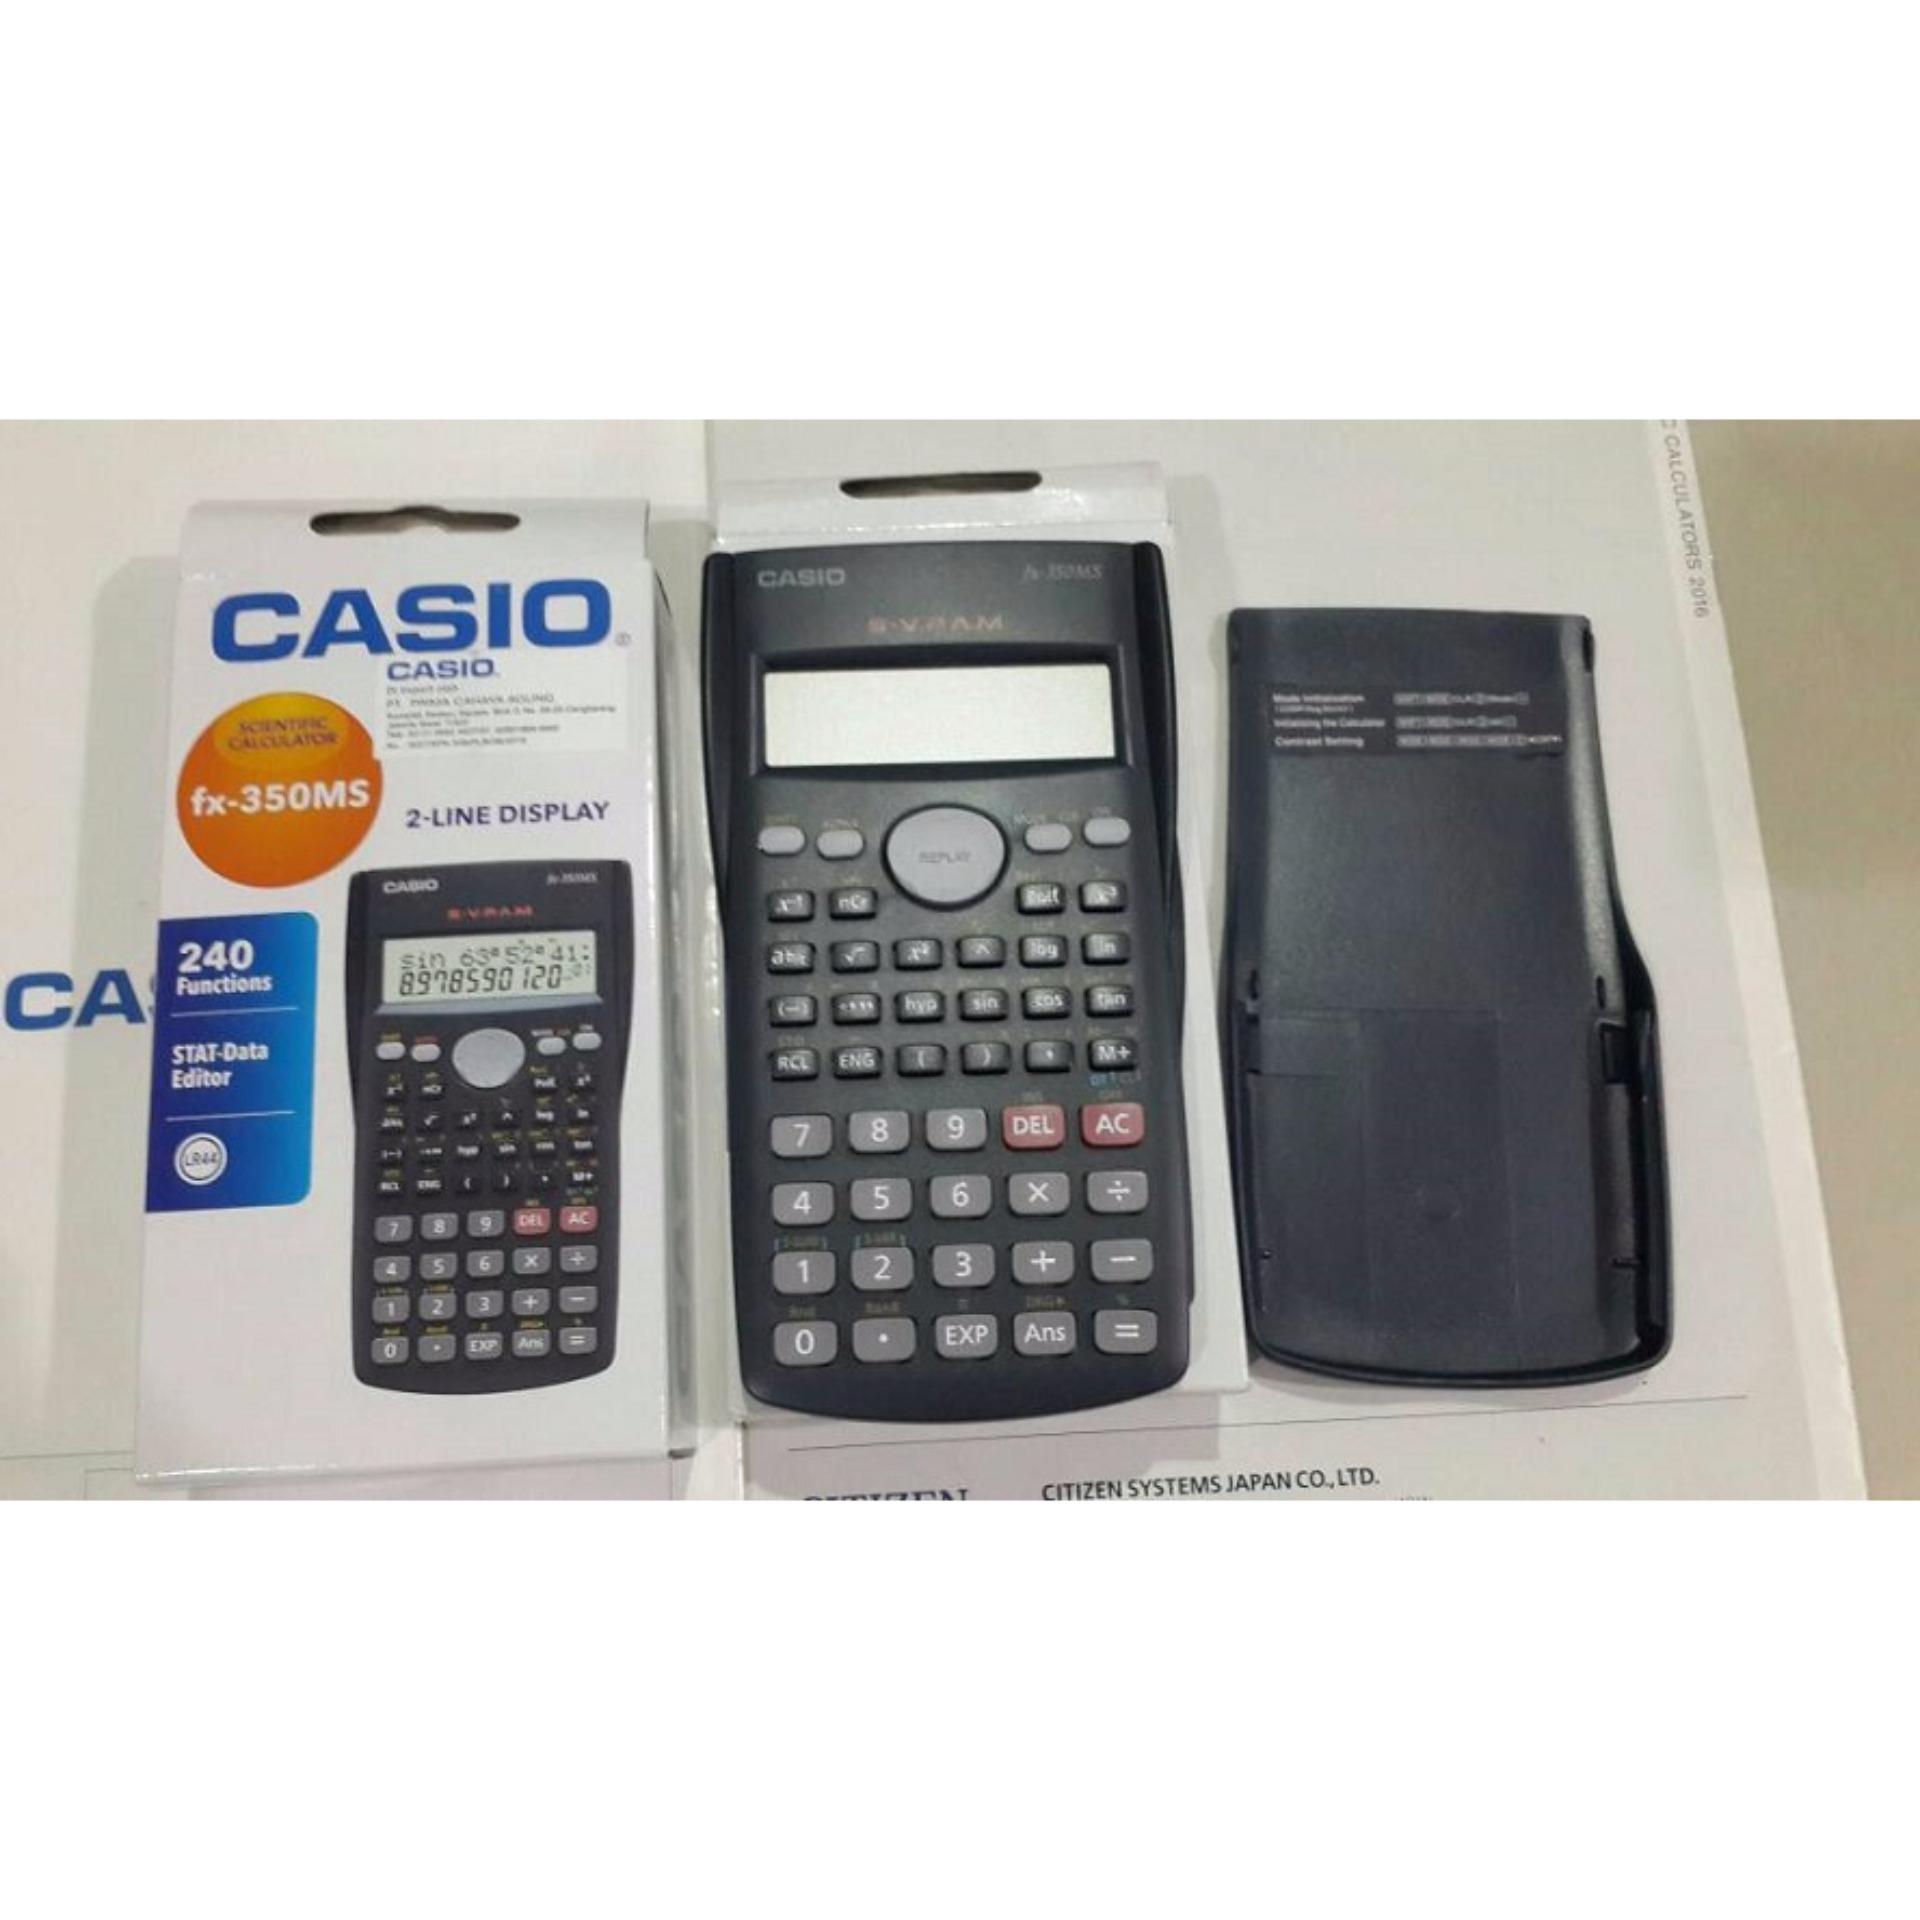 Casio Kalkulator Calculator Scientific Calculation FX350MS FX-350MS With 240 Function Ori Original Foto Asli